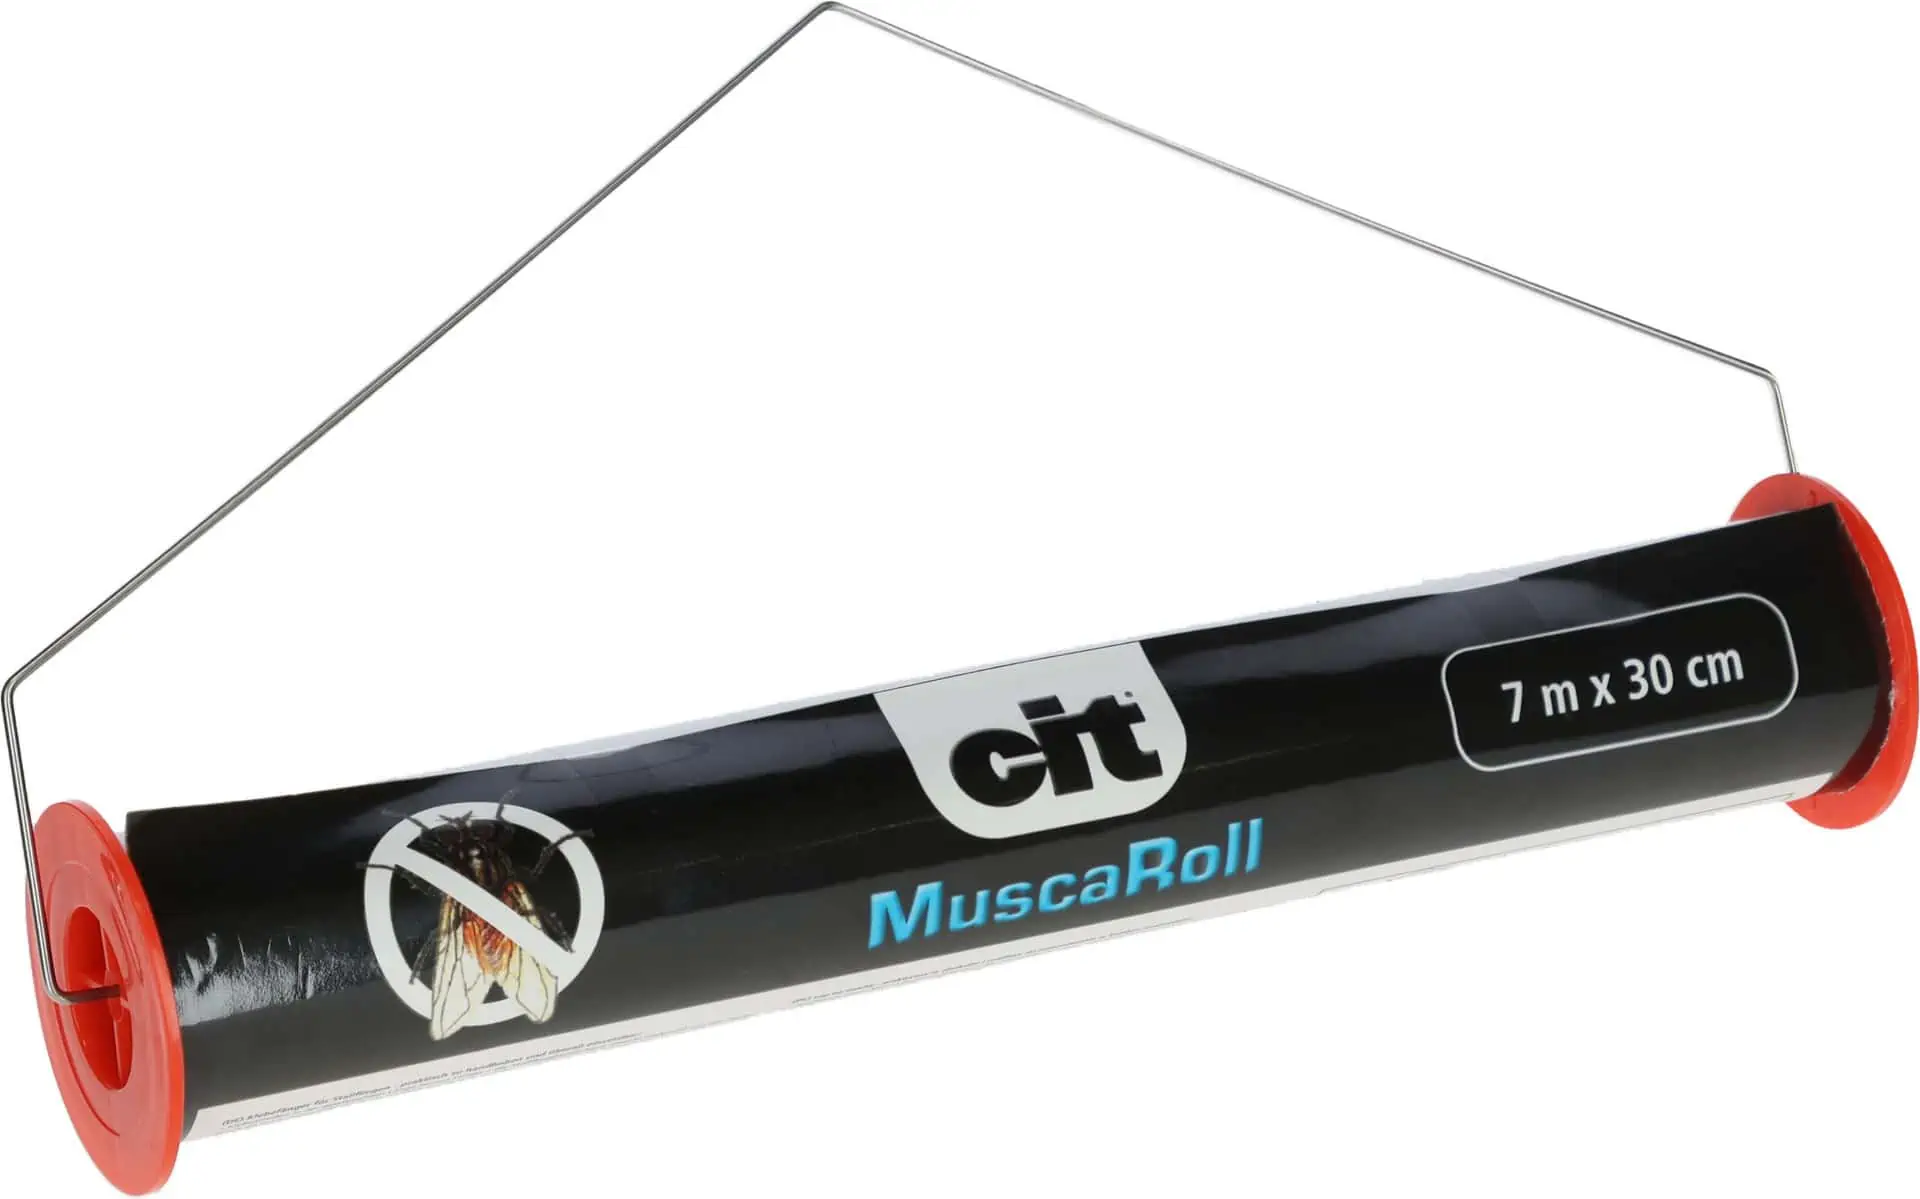 CIT flugrulle MuscaRoll metallhållare